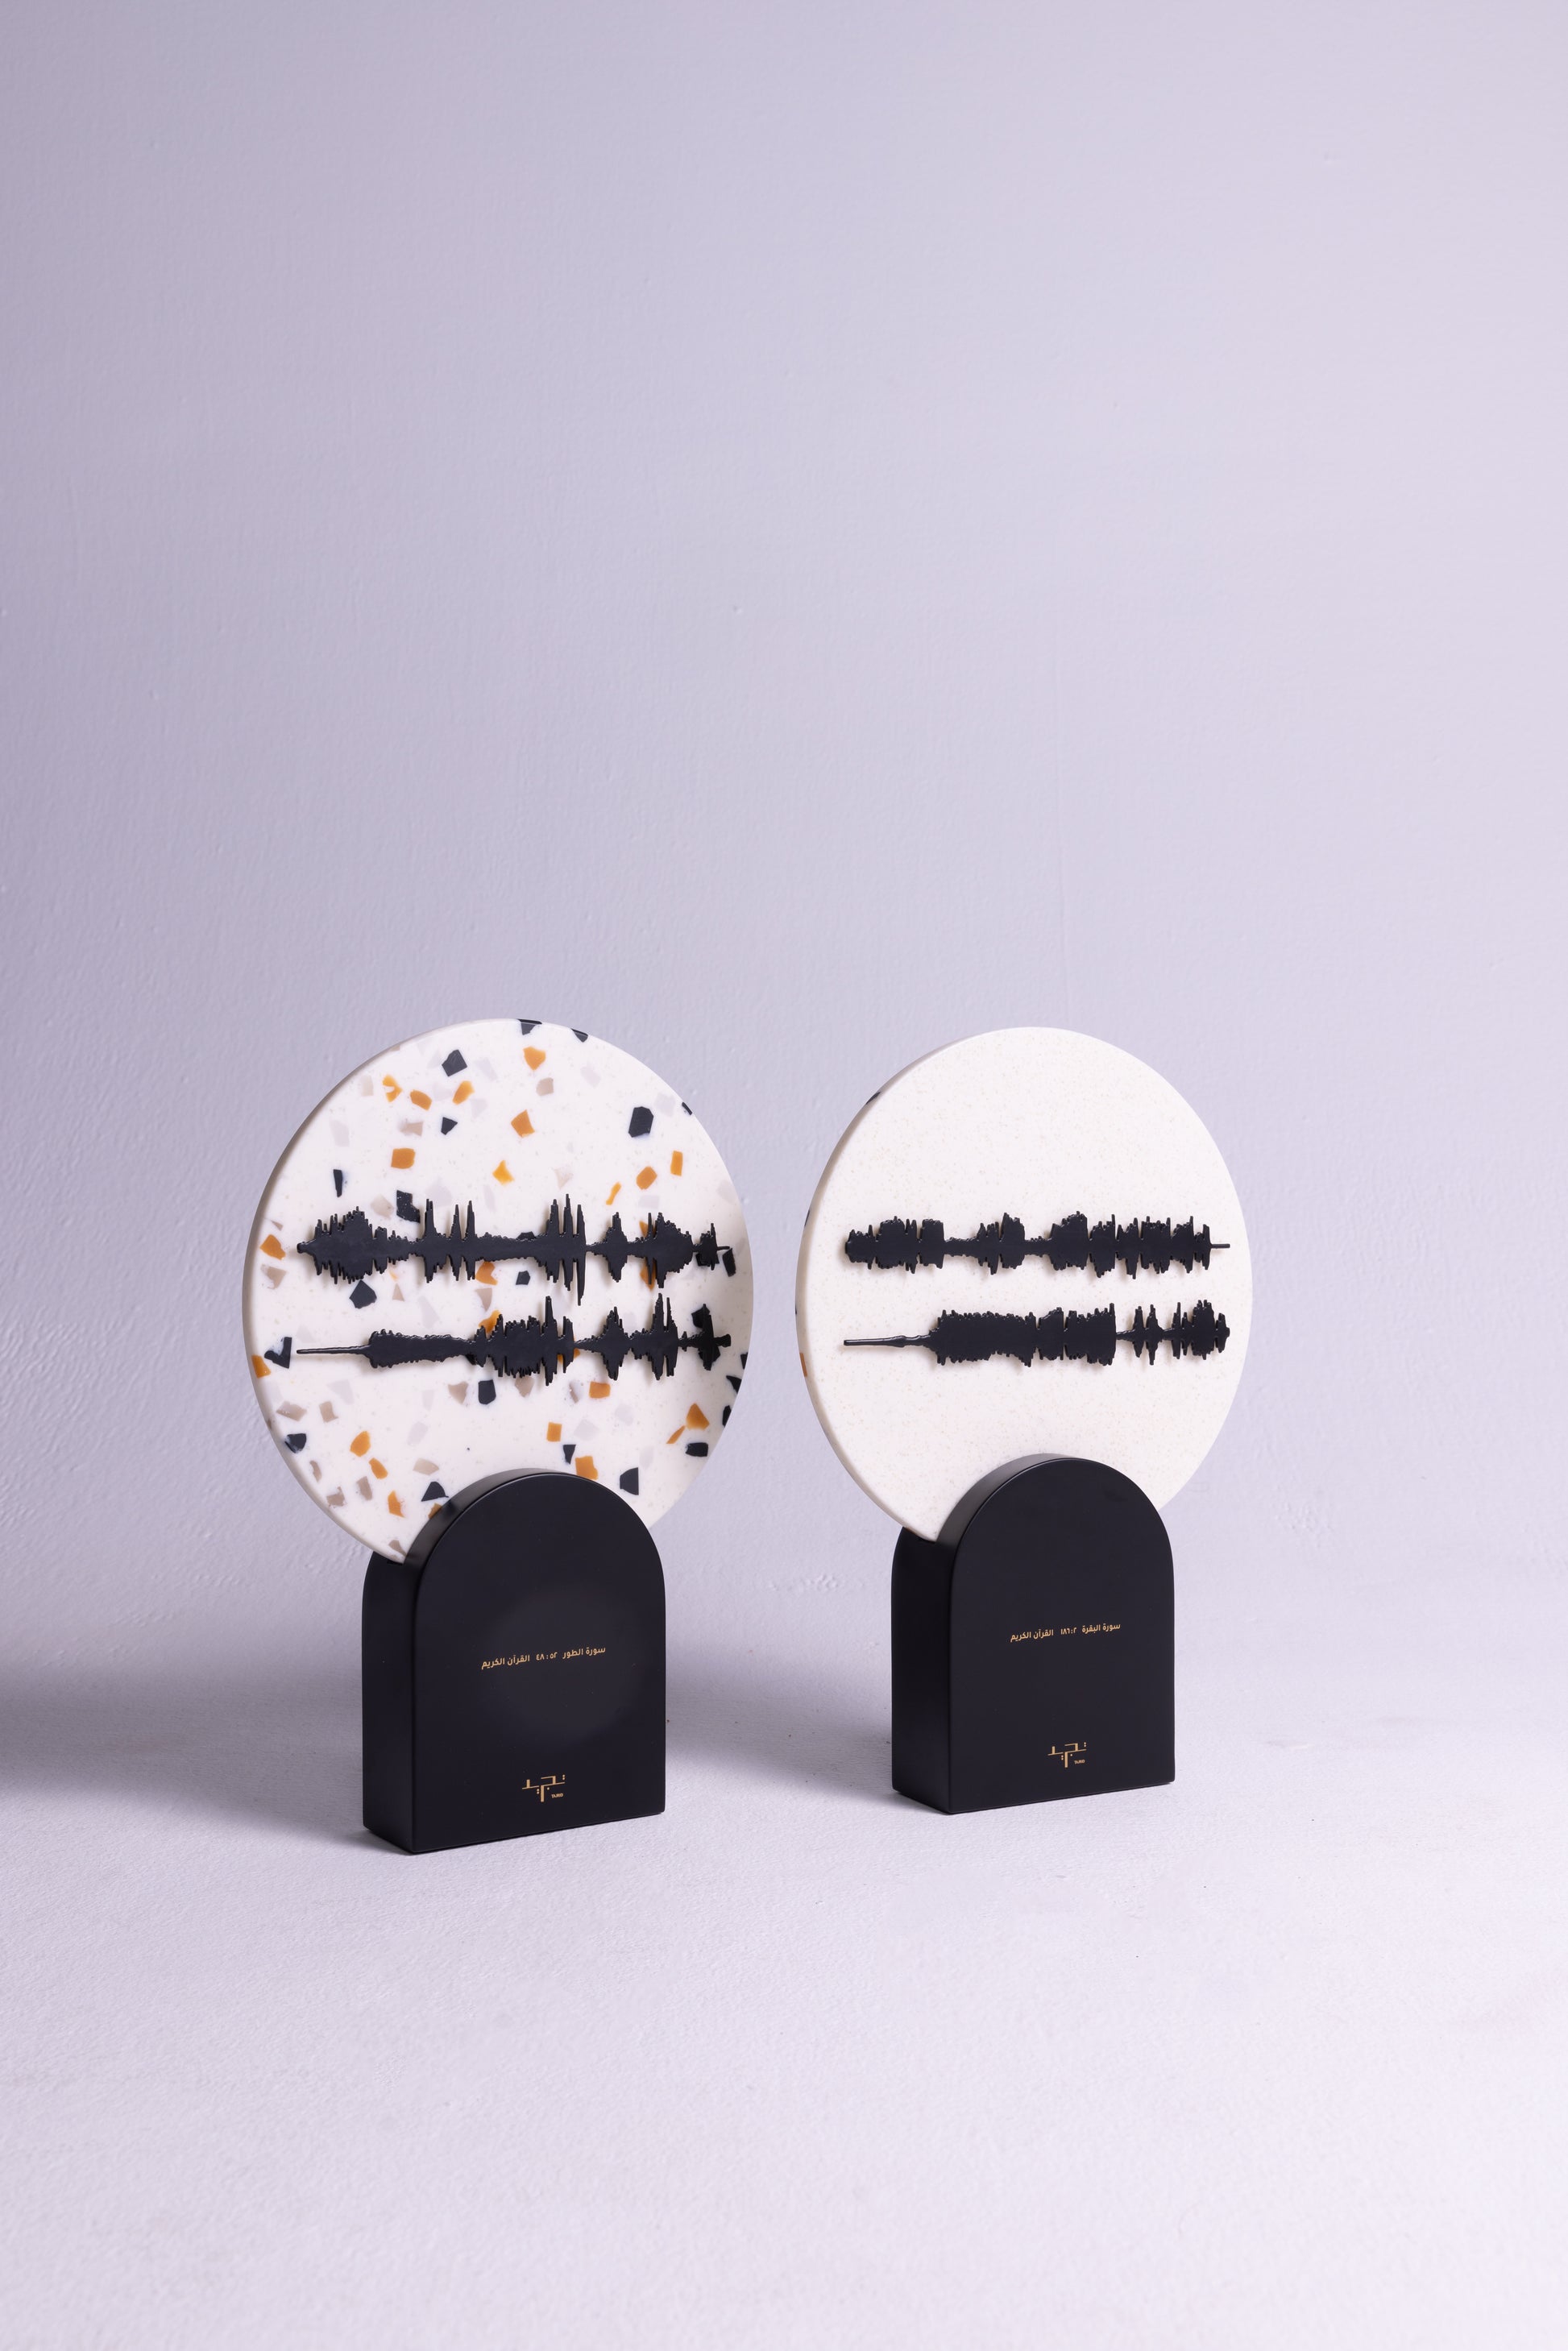 islamic art of soundwaves perfect for ramadan gift